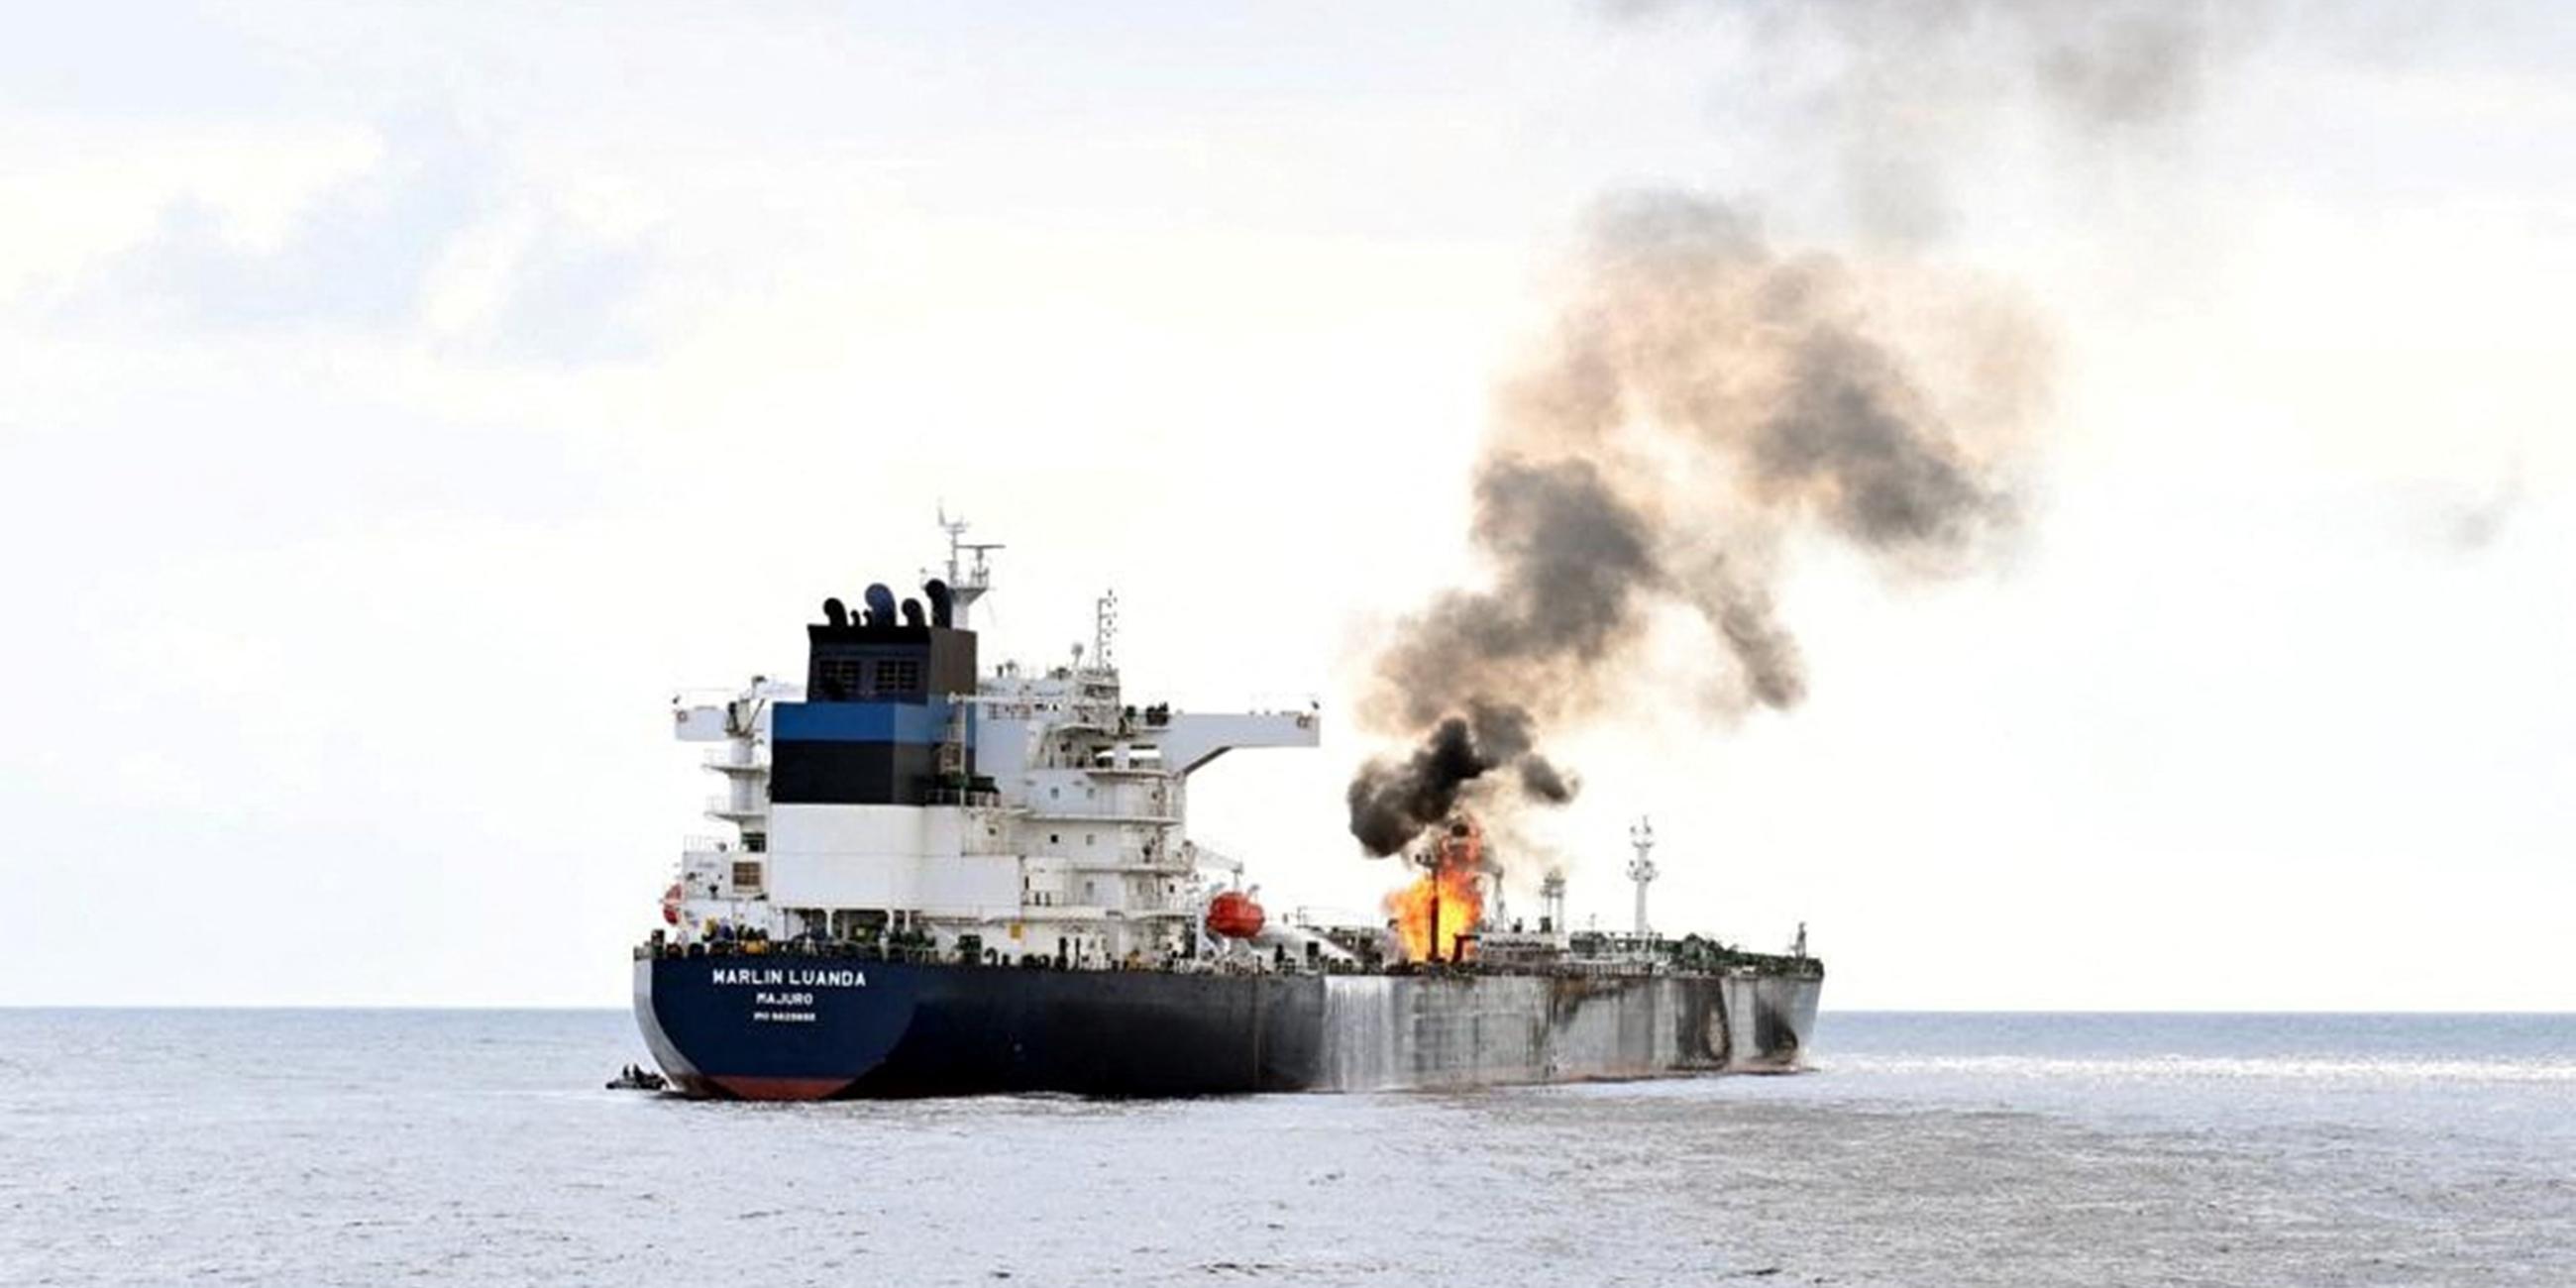 Frachtschiff Marlin Luanda brennt nach Huthi-Angriff